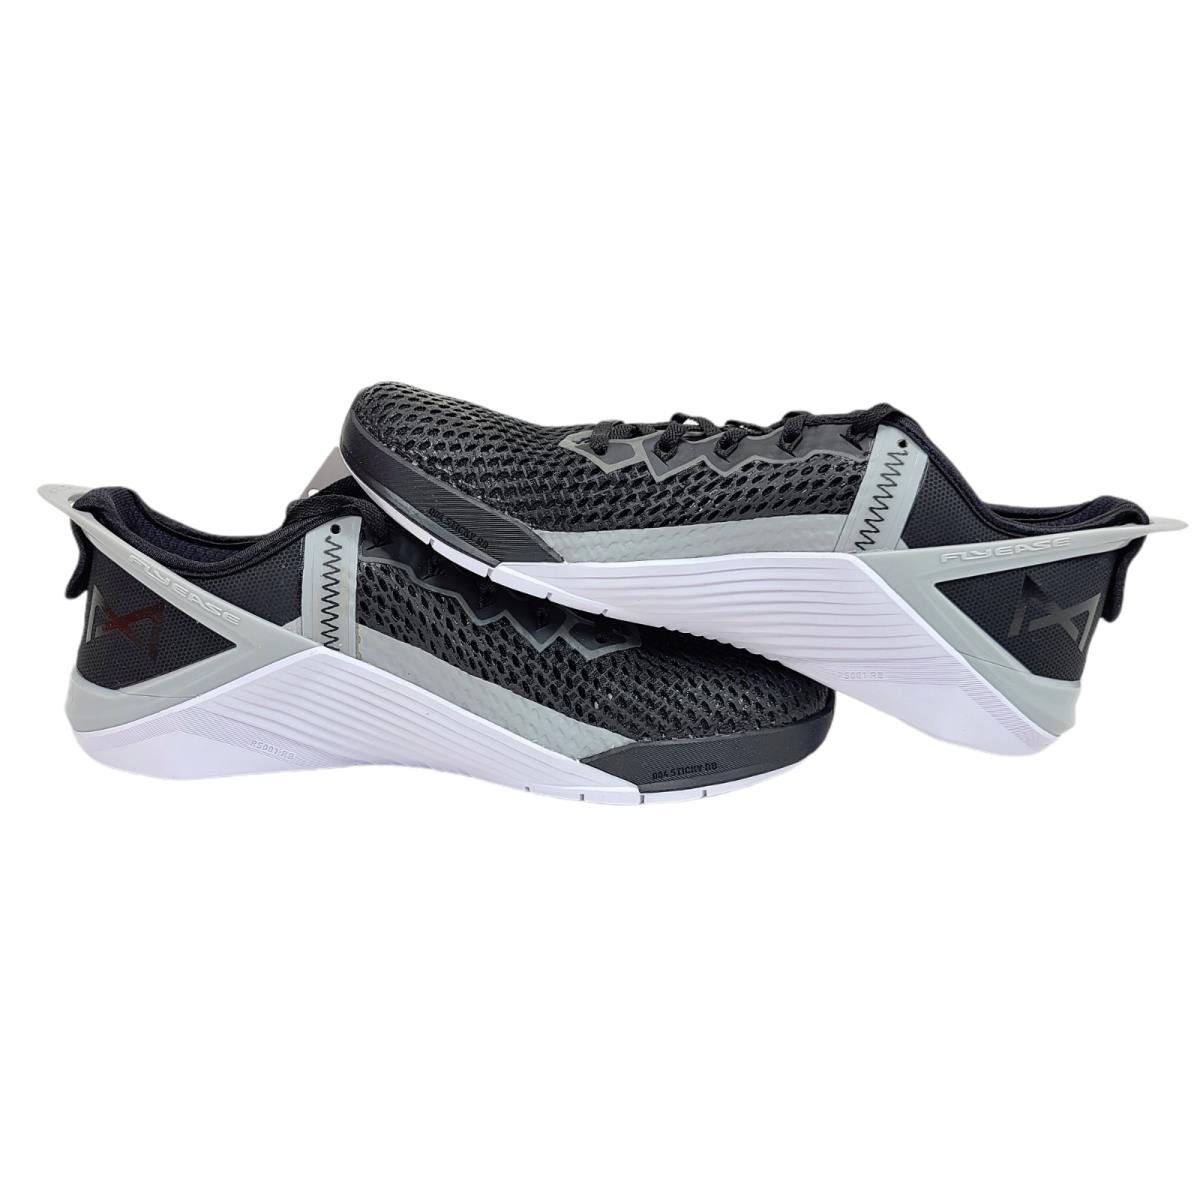 Nike shoes Metcon - Black 17